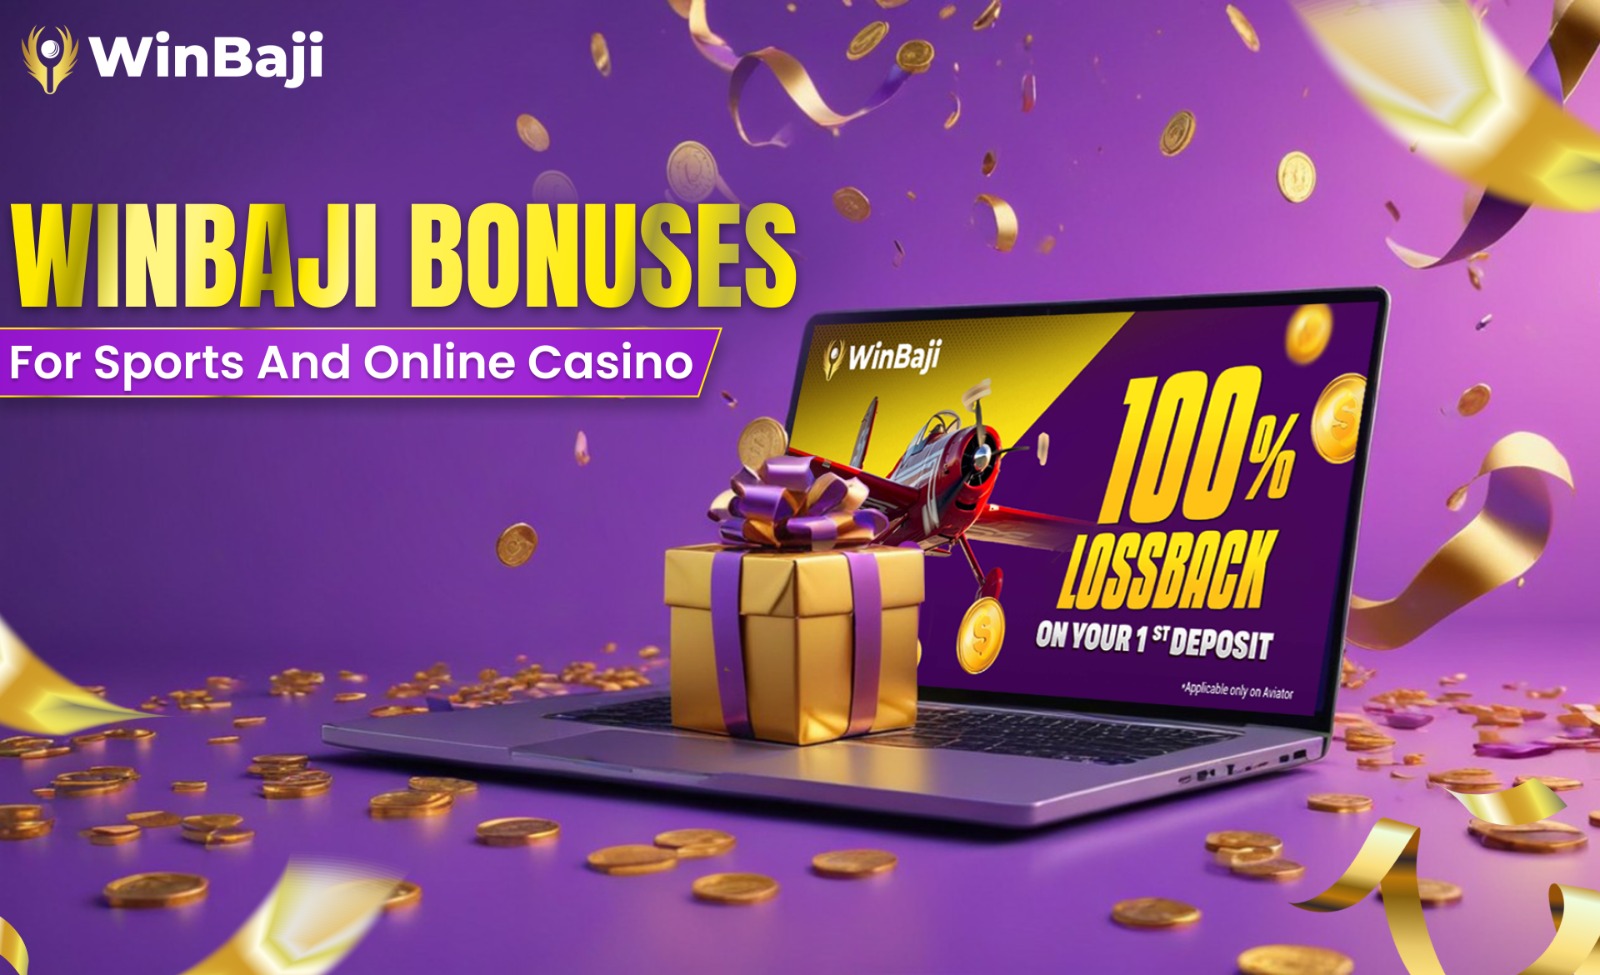 Winbaji Bonuses for Sports & Online Casino